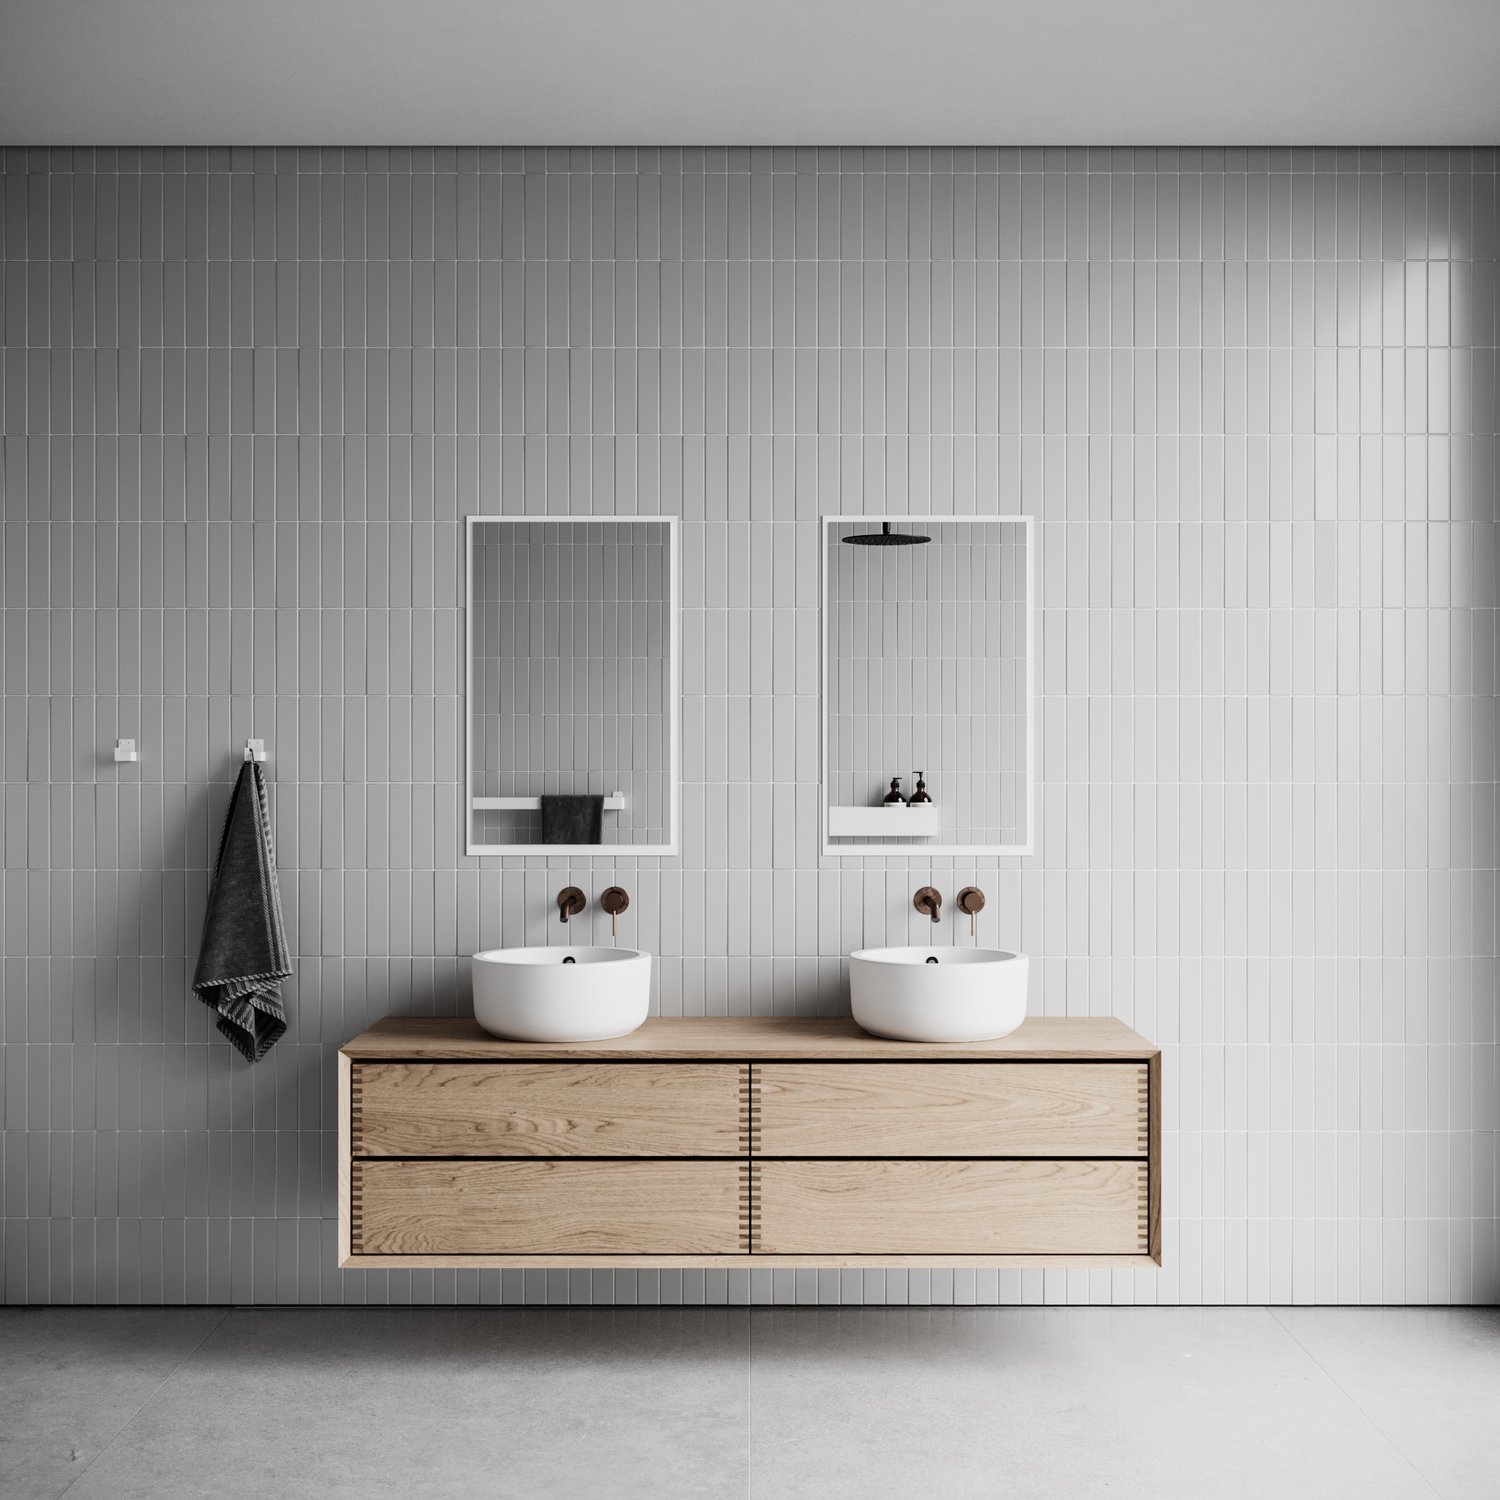 Nichba_Design_Scandinavian_Bathroom_BB_View01_Post_1500x